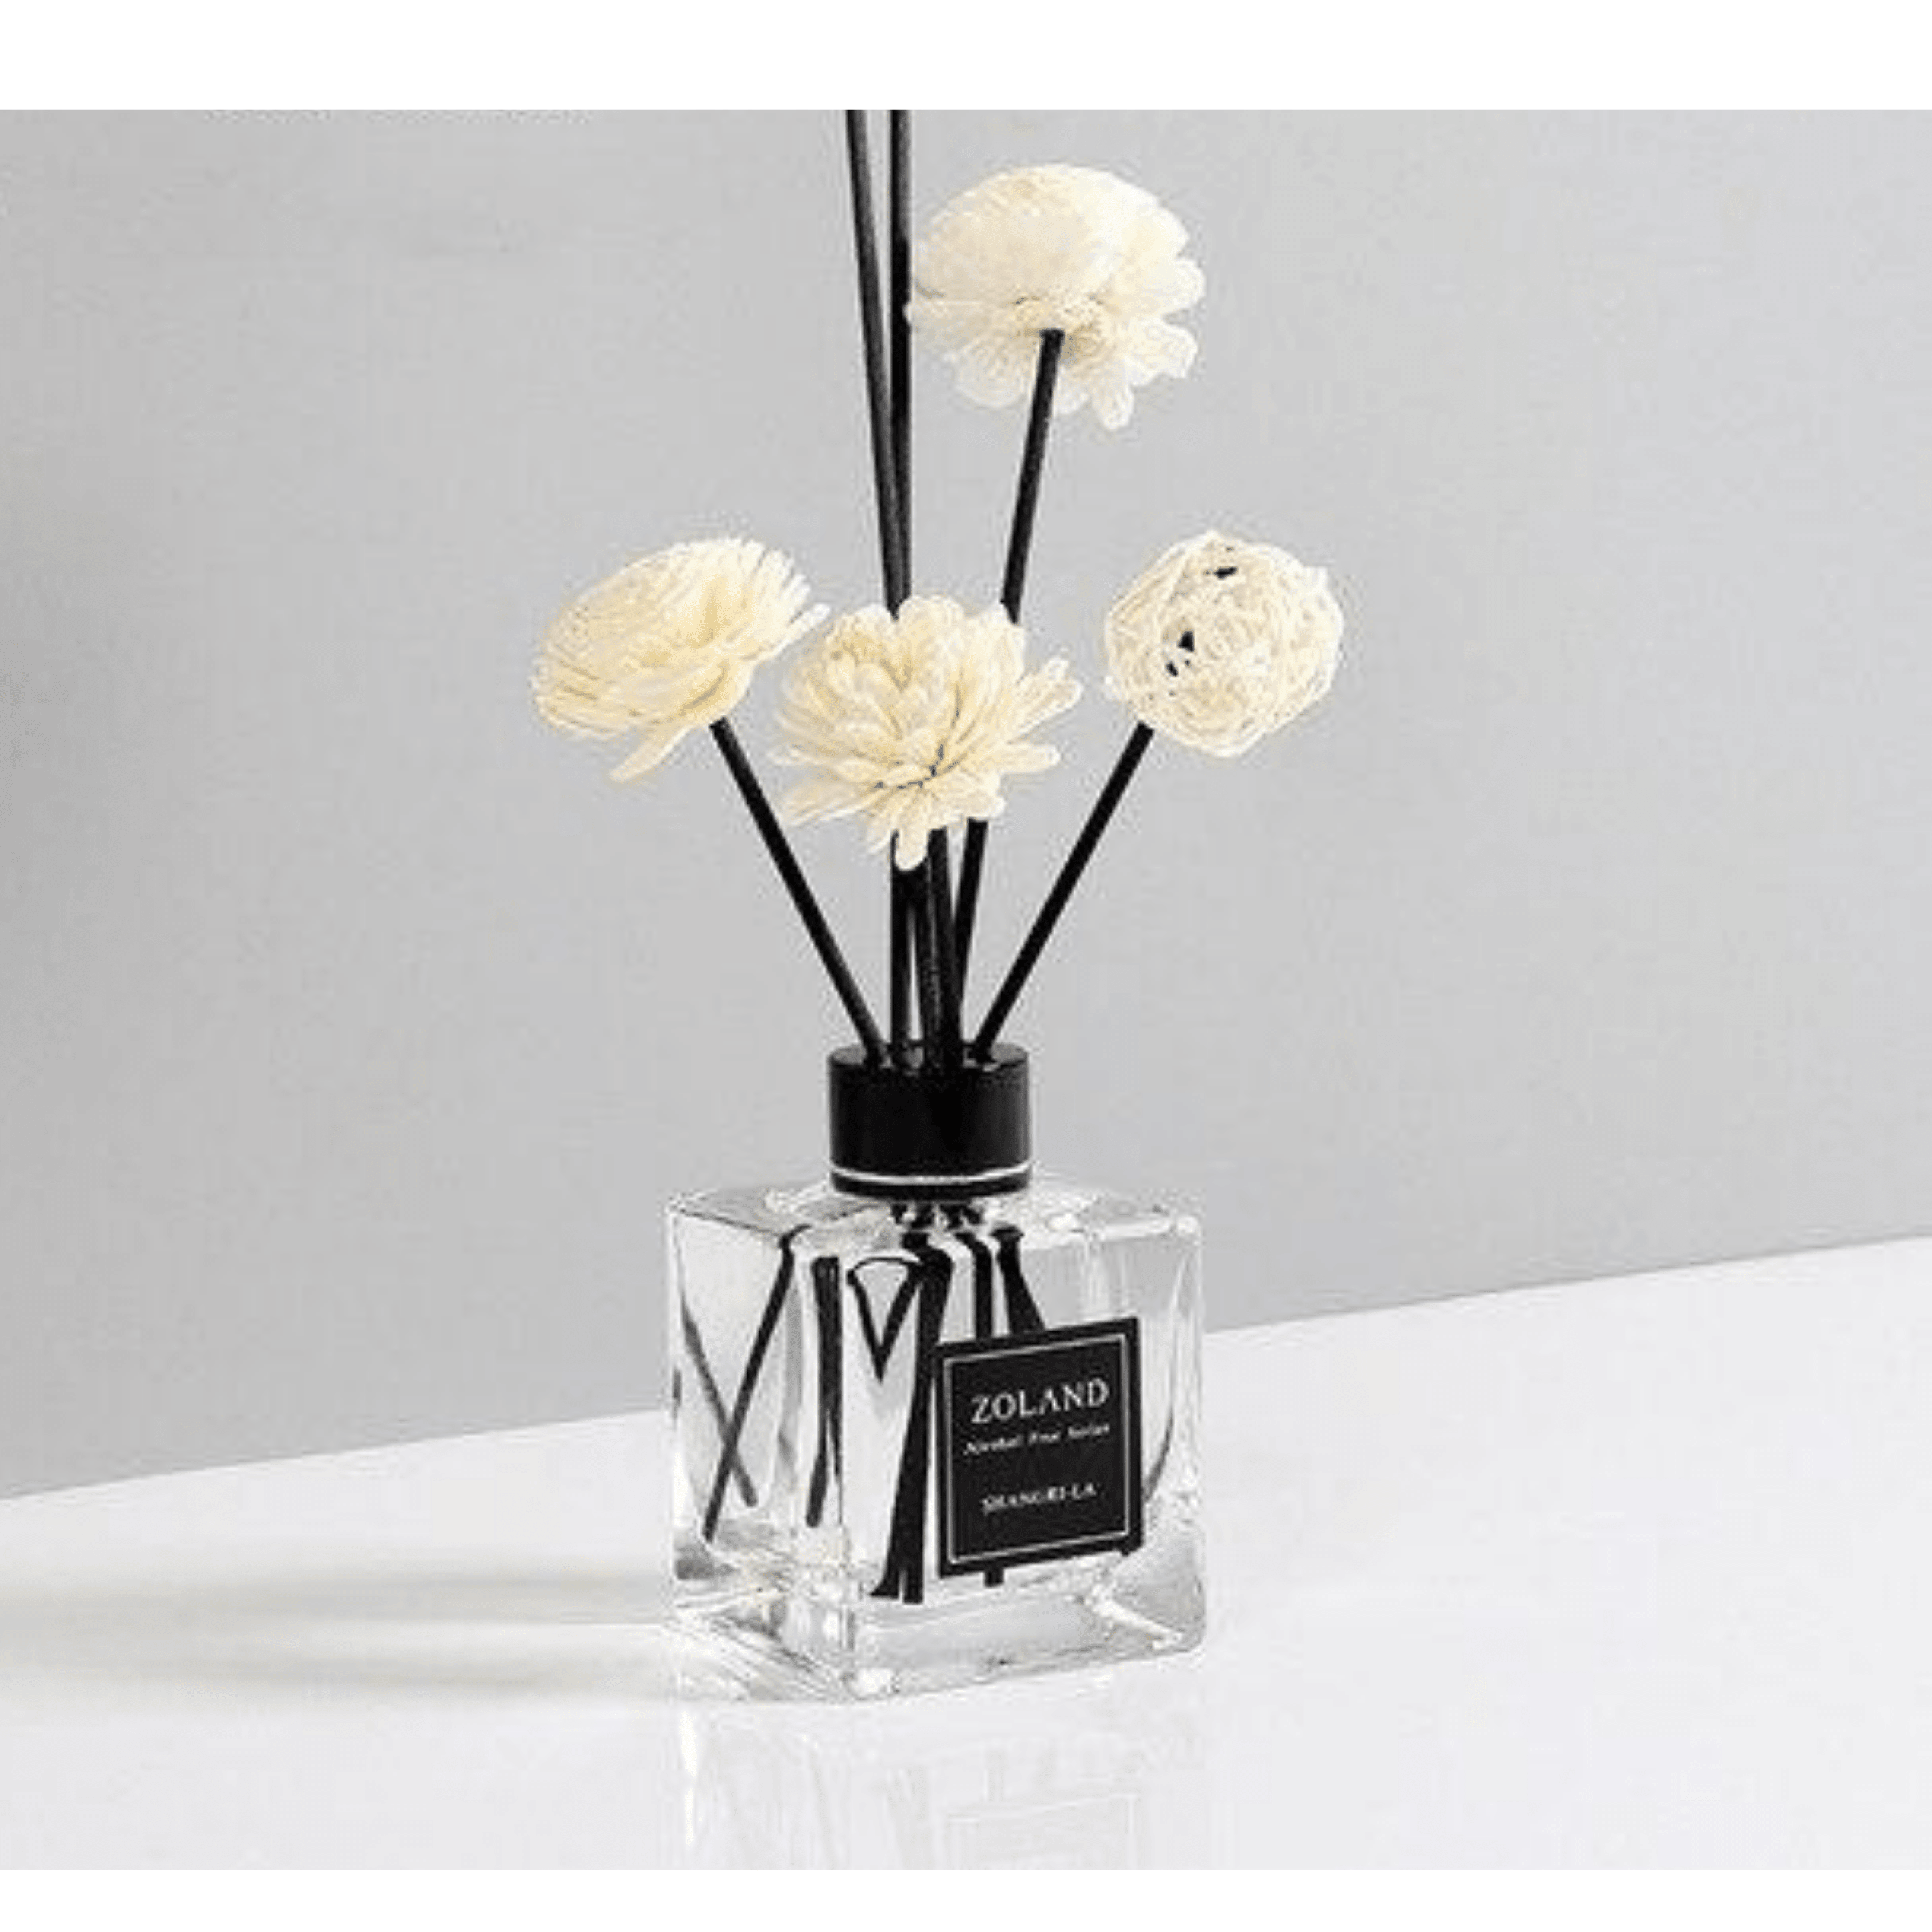 Shop 0 flower holder Acler Bathroom Accessories Mademoiselle Home Decor